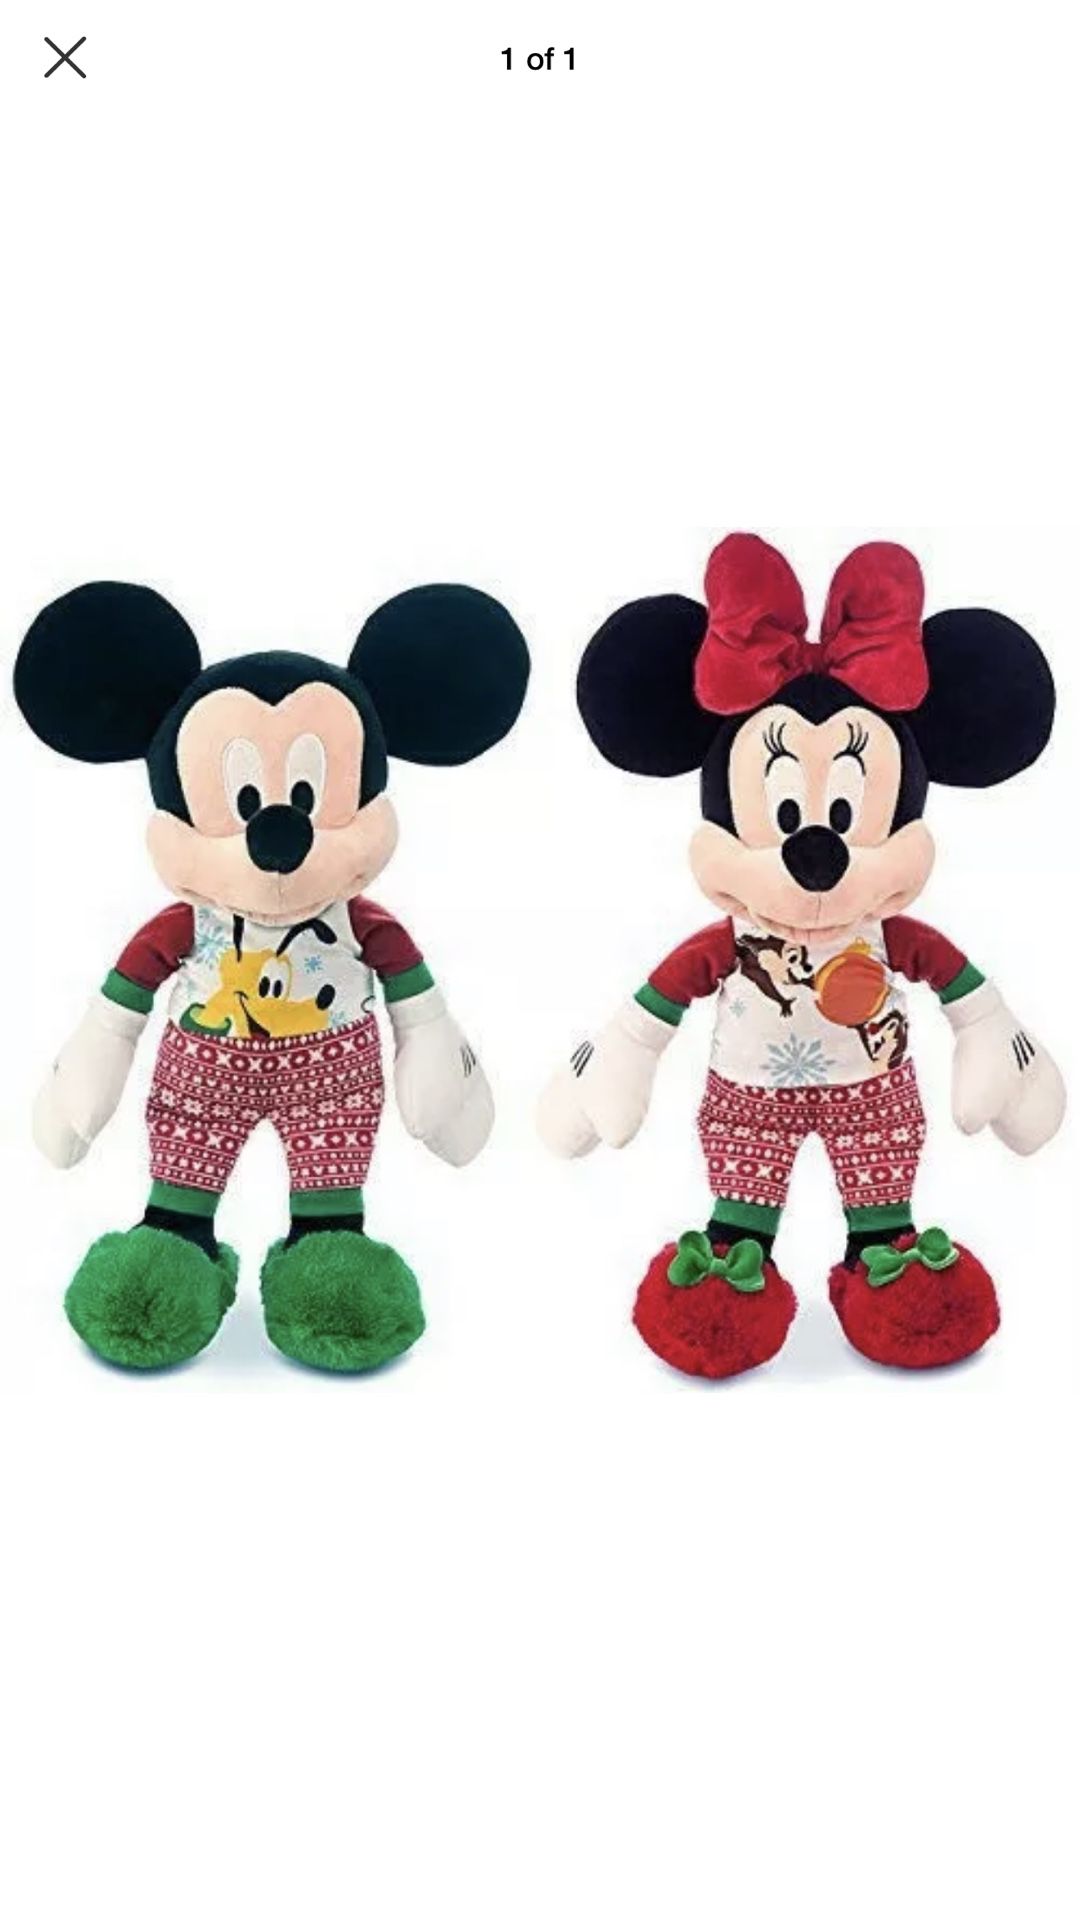 Disney Mickey and Minnie Mouse holiday pajamas plush doll set 18" medium (2pcs)